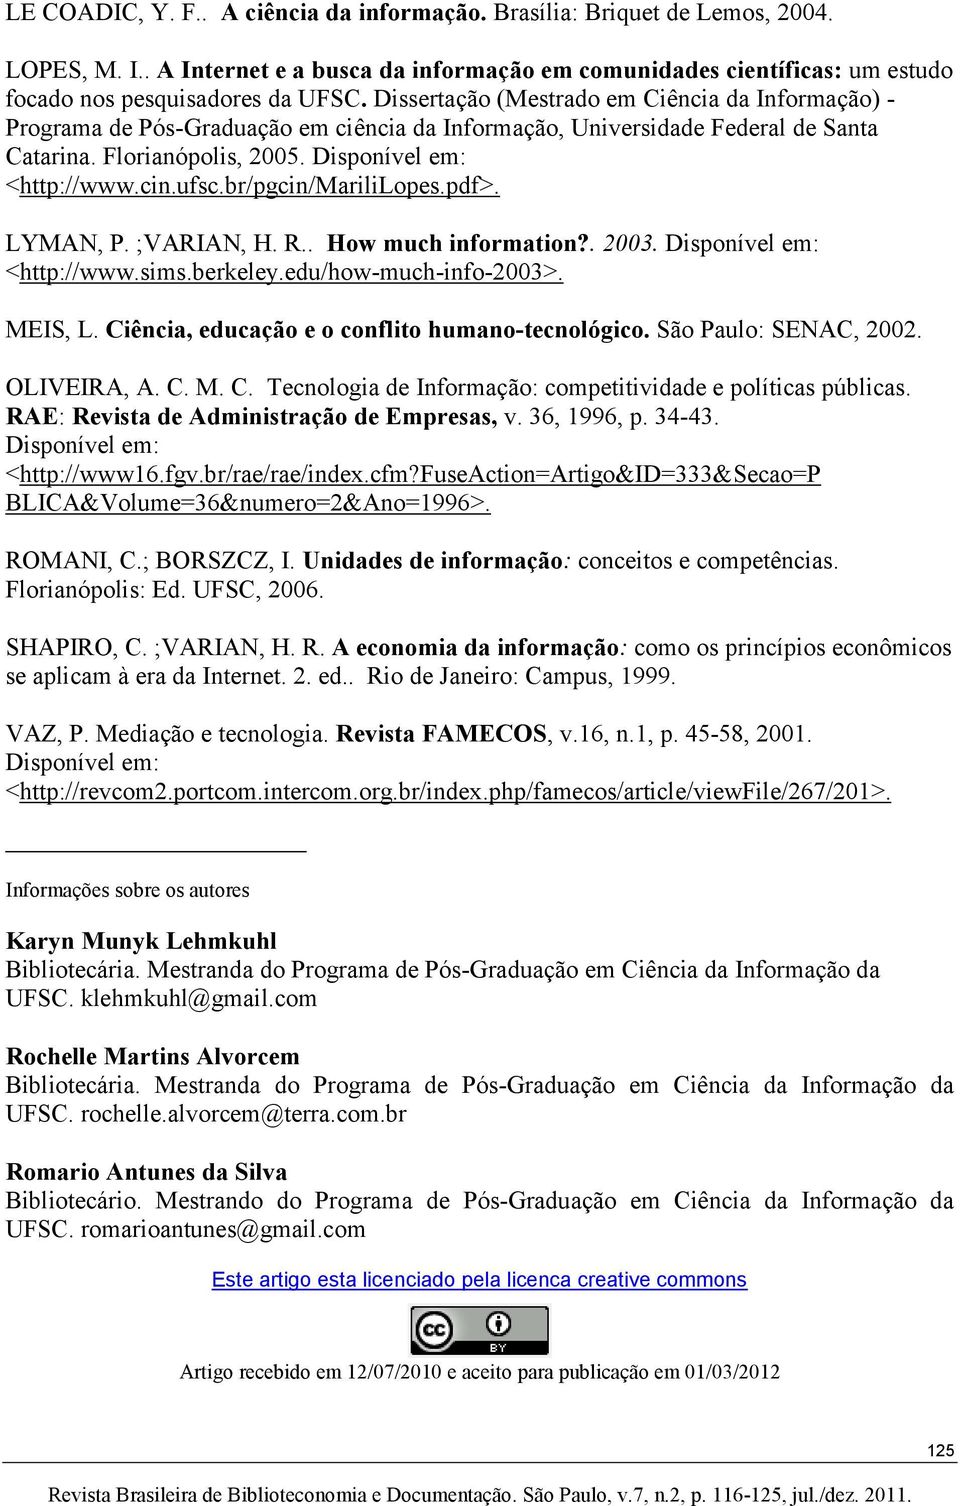 br/pgcin/marililopes.pdf>. LYMAN, P. ;VARIAN, H. R.. How much information?. 2003. Disponível em: <http://www.sims.berkeley.edu/how-much-info-2003>. MEIS, L.